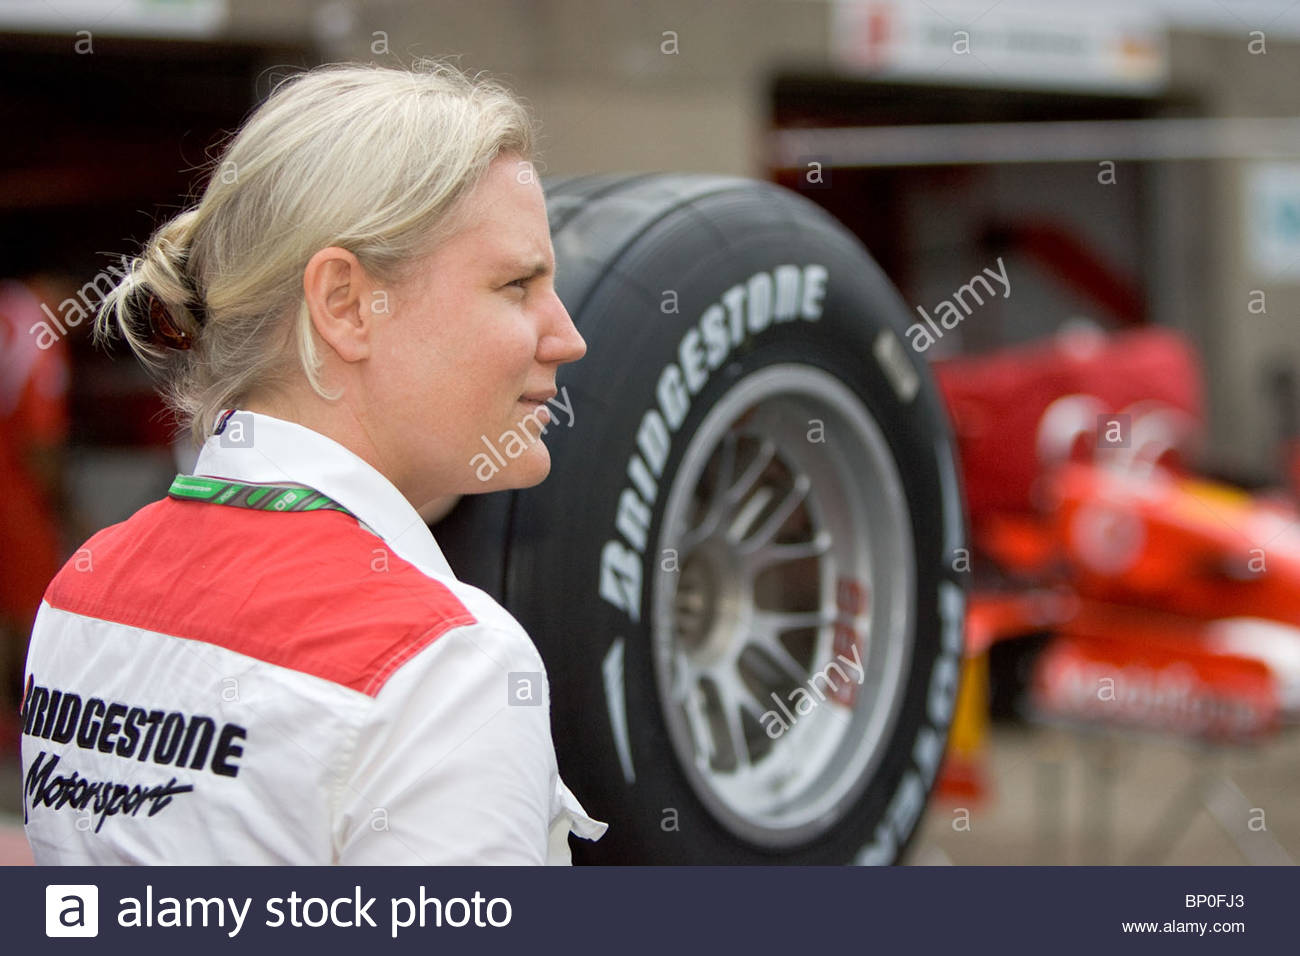 A woman and a Bridgestone tyre.